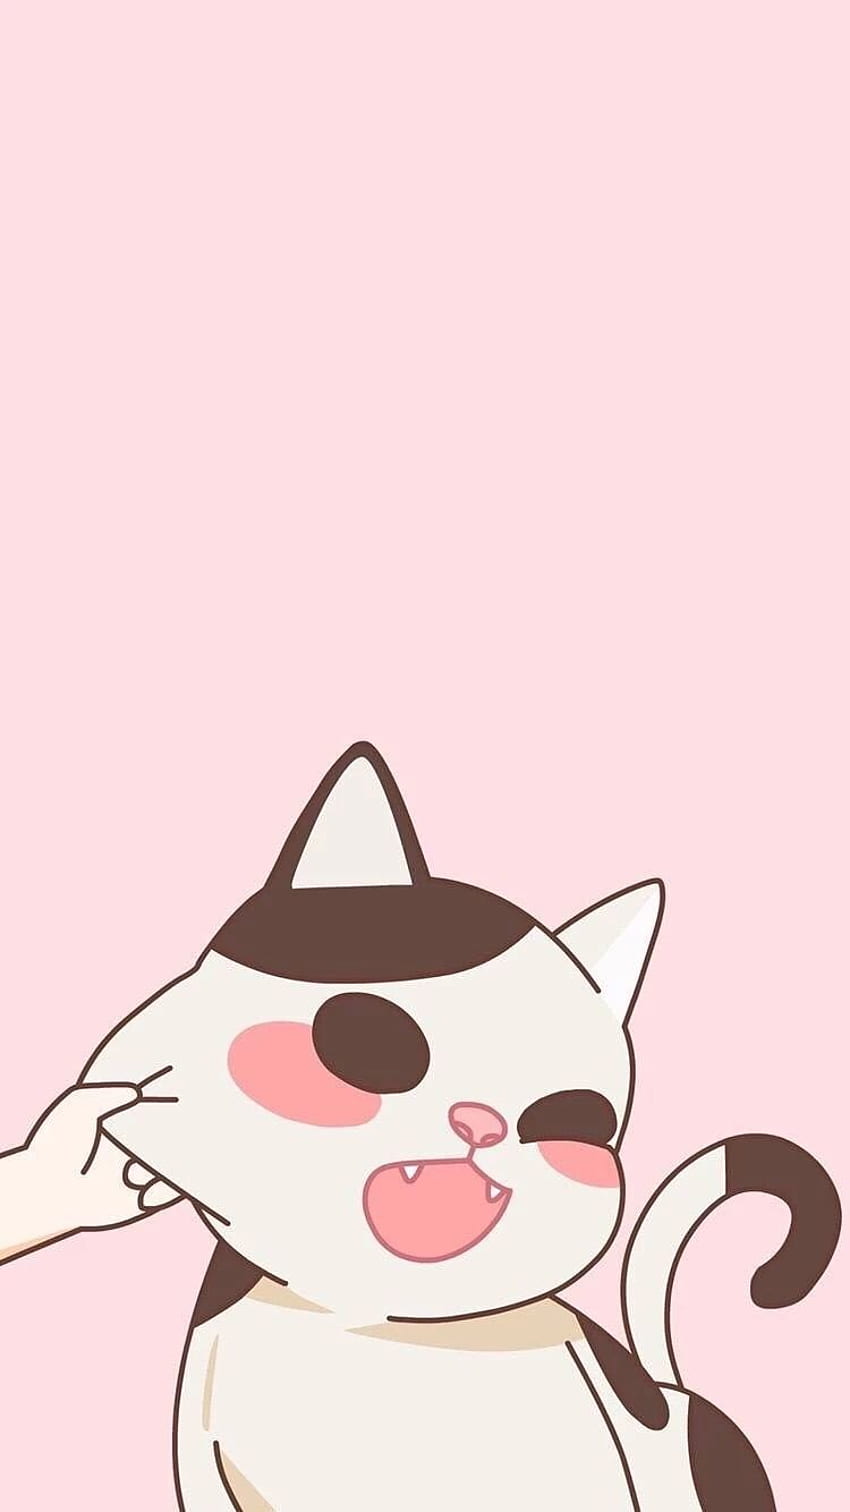 Cute Cartoon Cat  manga series cat Wallpaper Download  MobCup